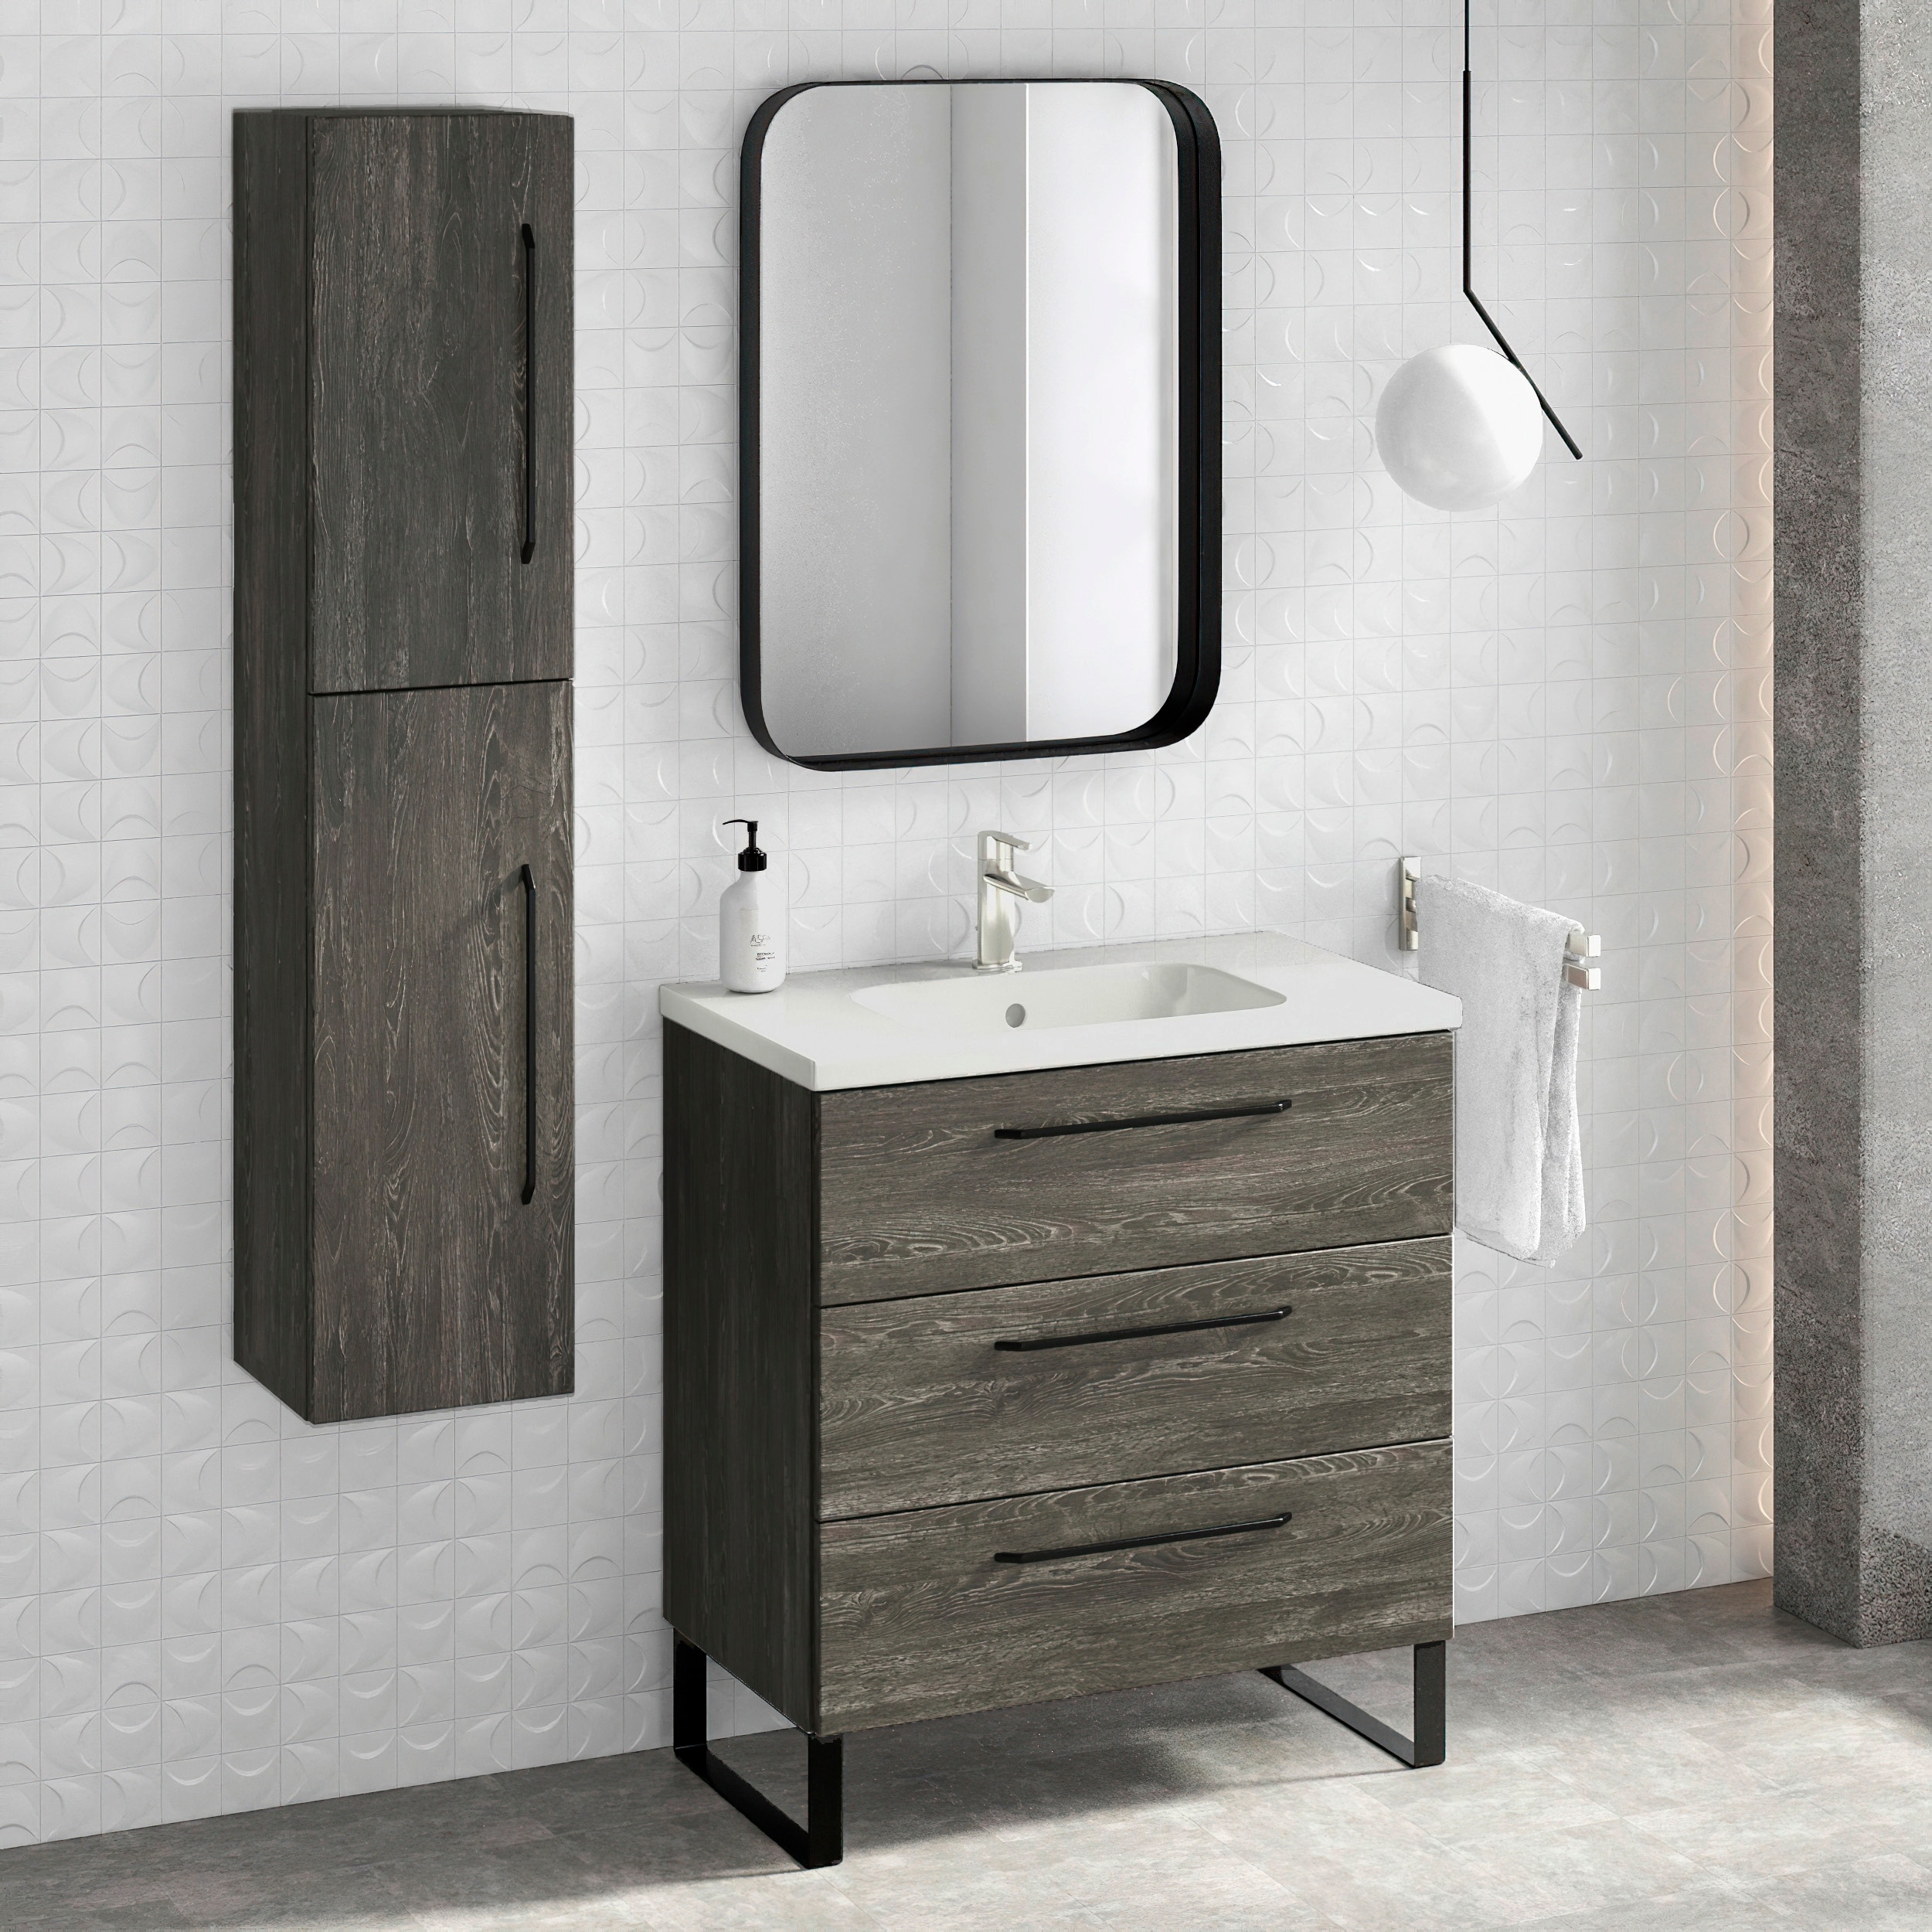 32 Bathroom Vanity Cabinet Ceramic Sink Set Denver W 32 X H